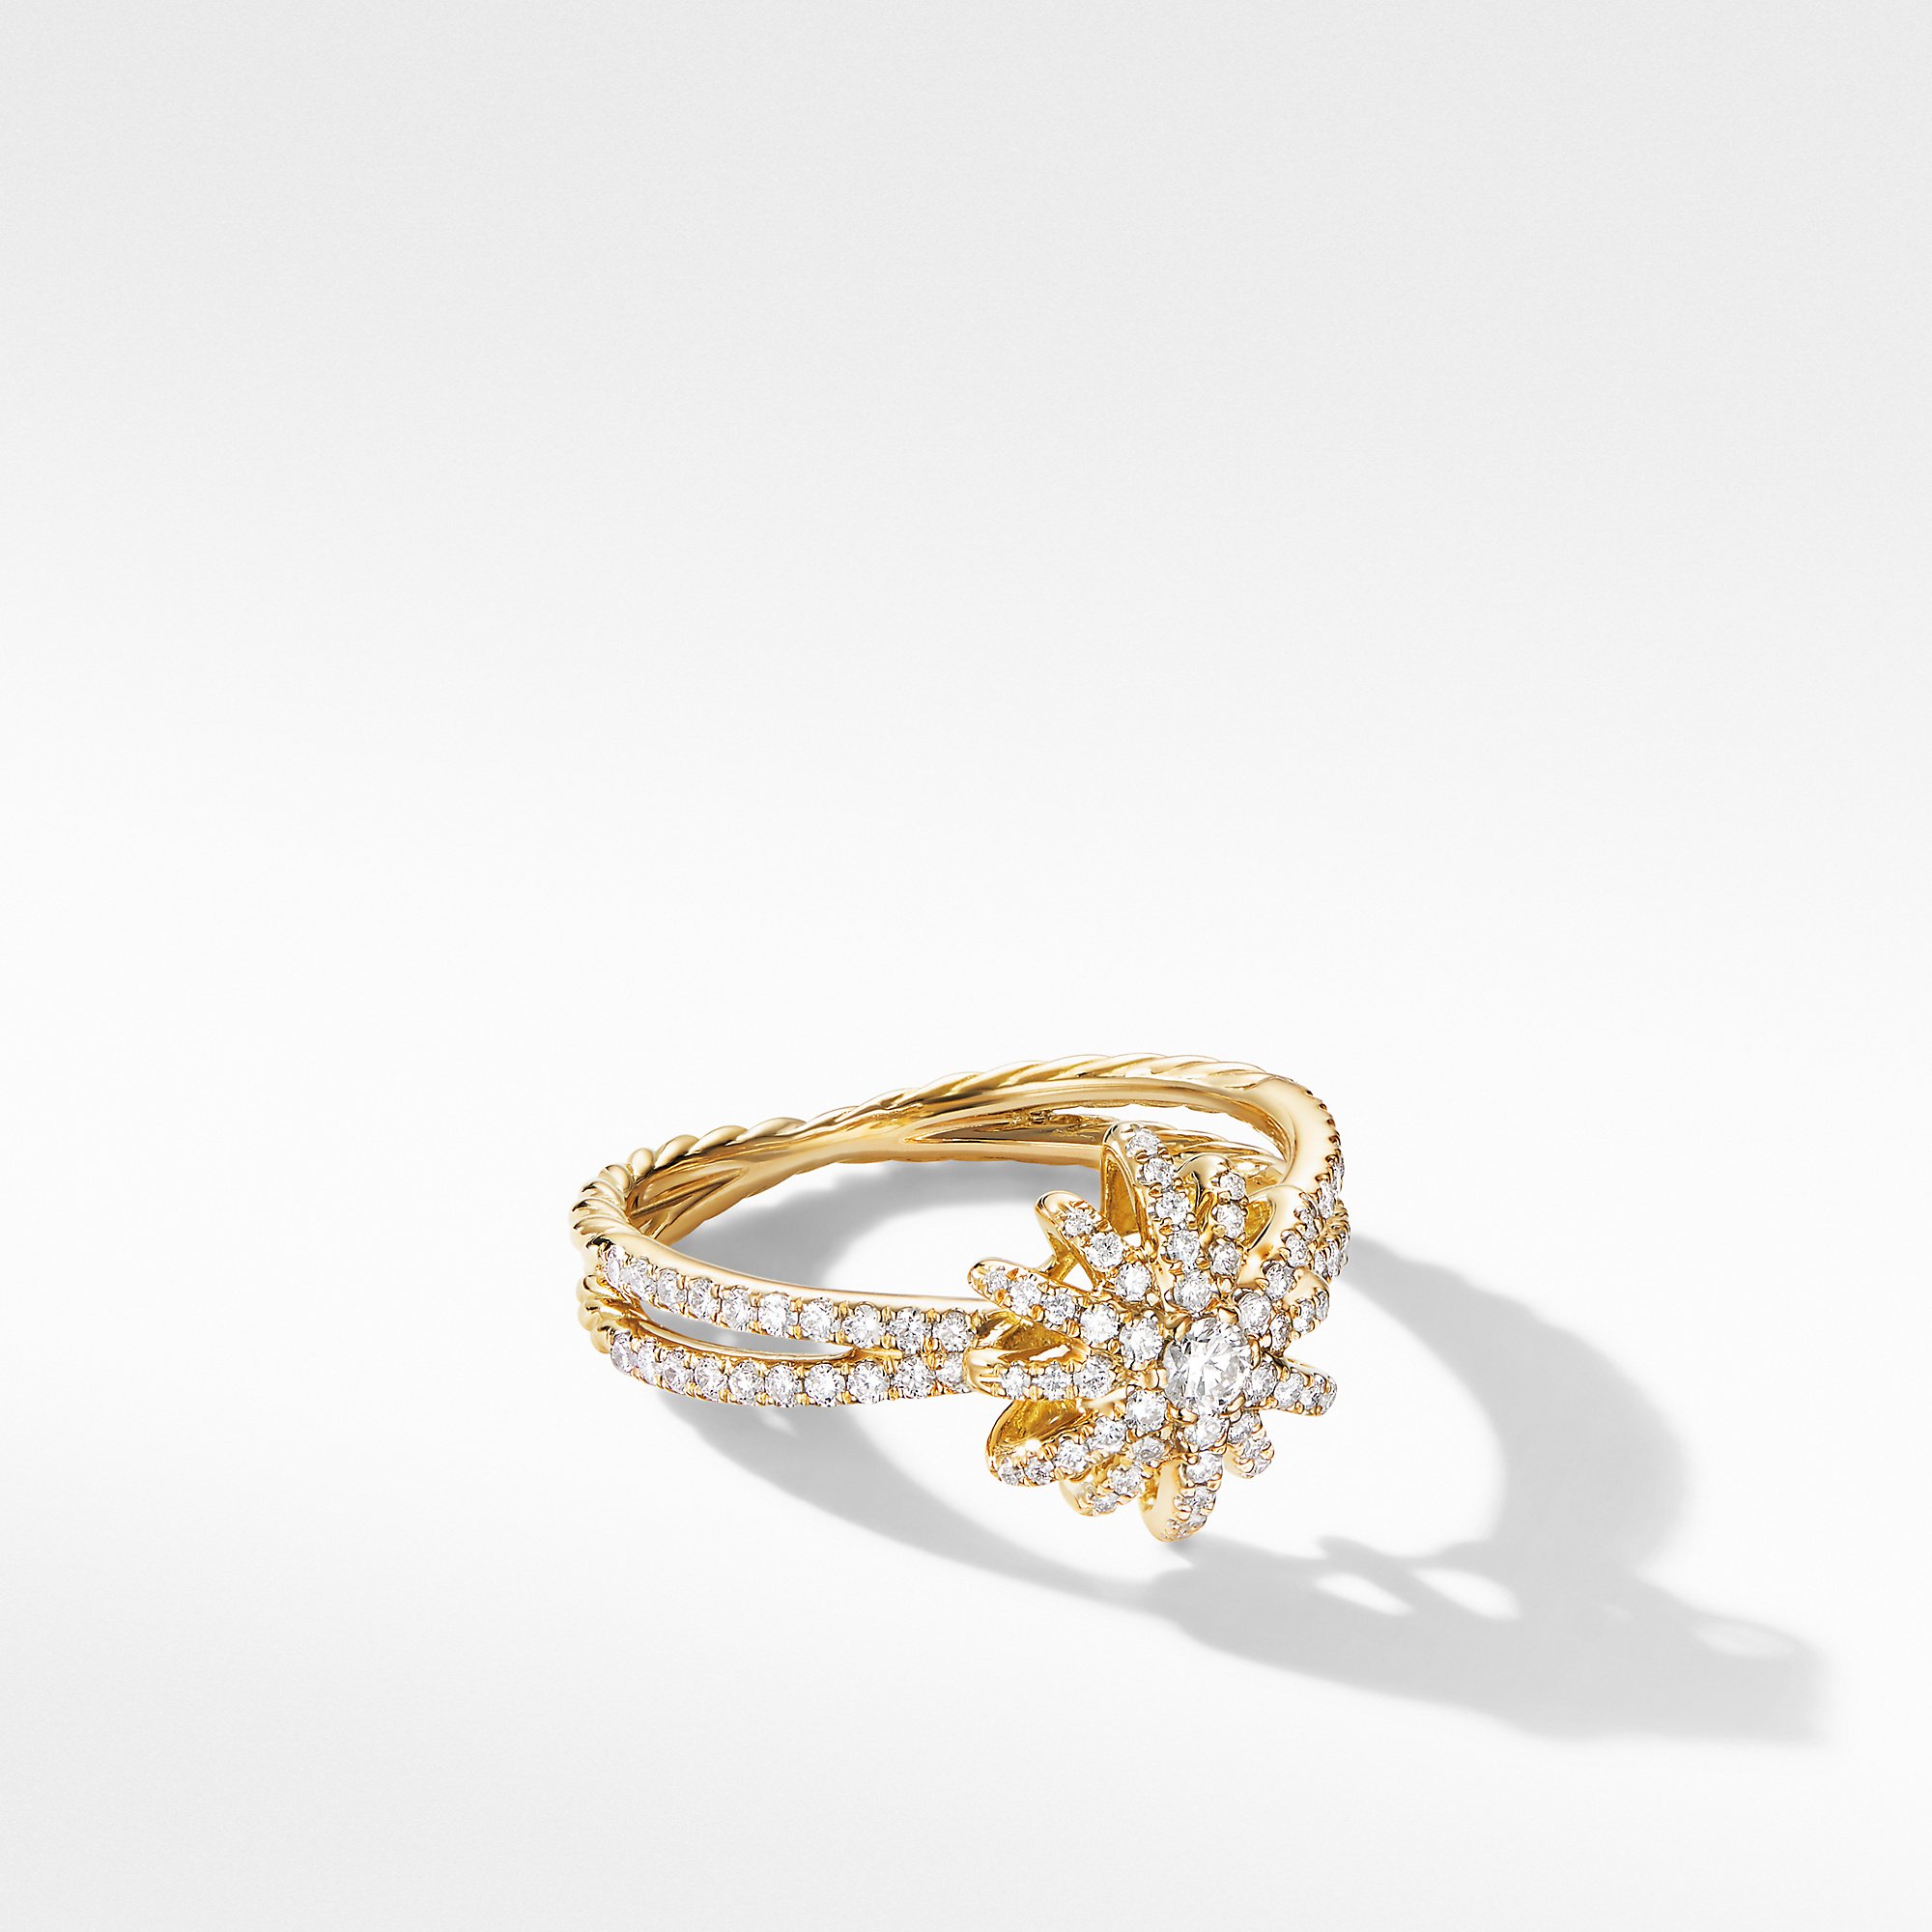 David Yurman Starburst Ring in 18K Yellow Gold with Pave Diamonds, size 7 0